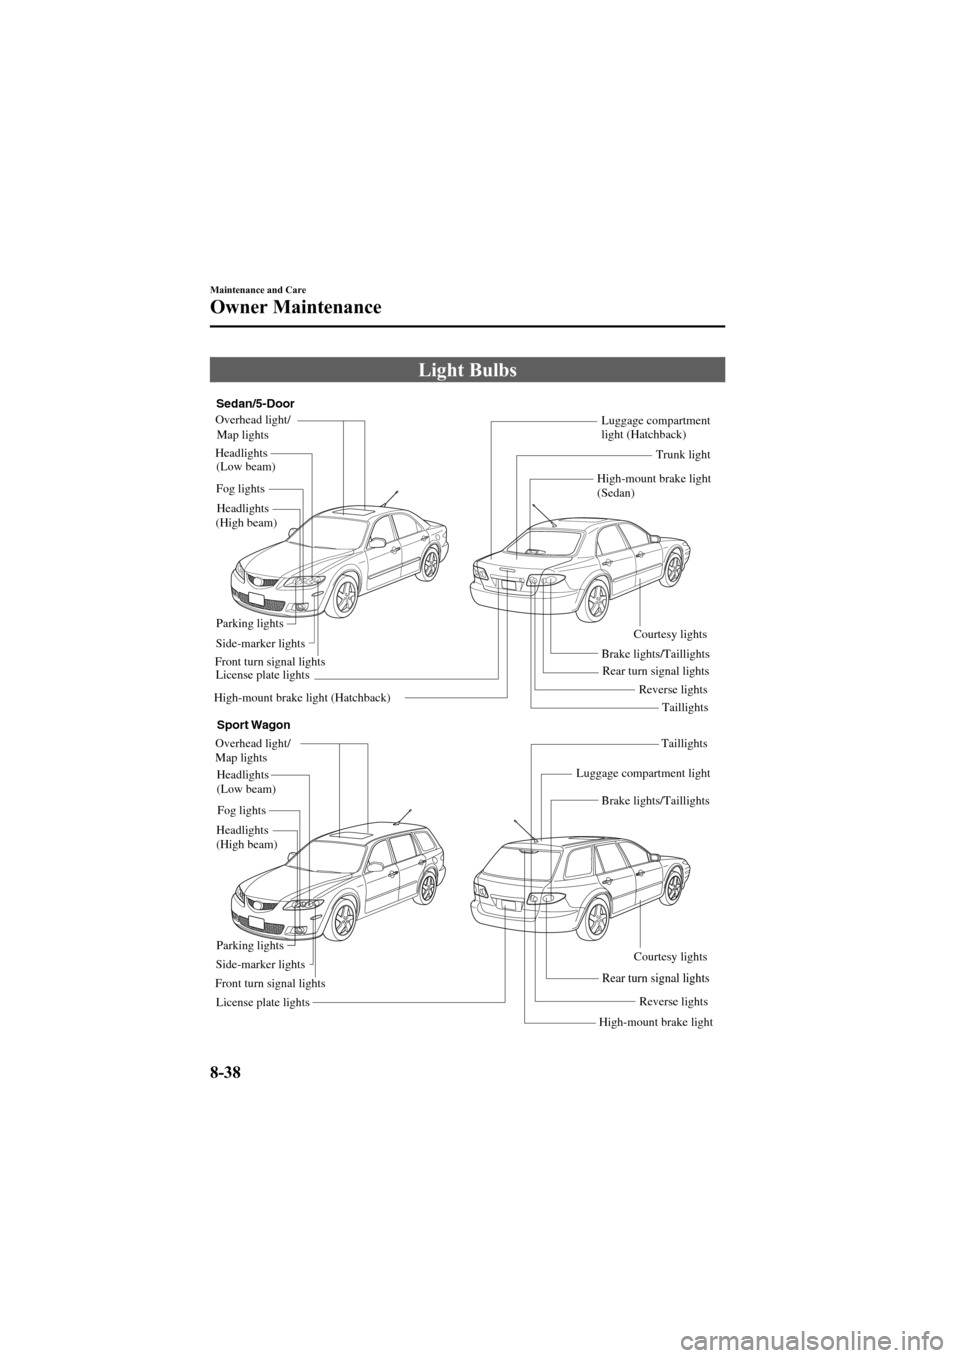 MAZDA MODEL 6 2008  Owners Manual (in English) Black plate (302,1)
Light Bulbs
Luggage compartment 
light (Hatchback)
High-mount brake light 
(Sedan)
Headlights
(High beam) Headlights
(Low beam)
Overhead light/ 
Map lights
Luggage compartment ligh